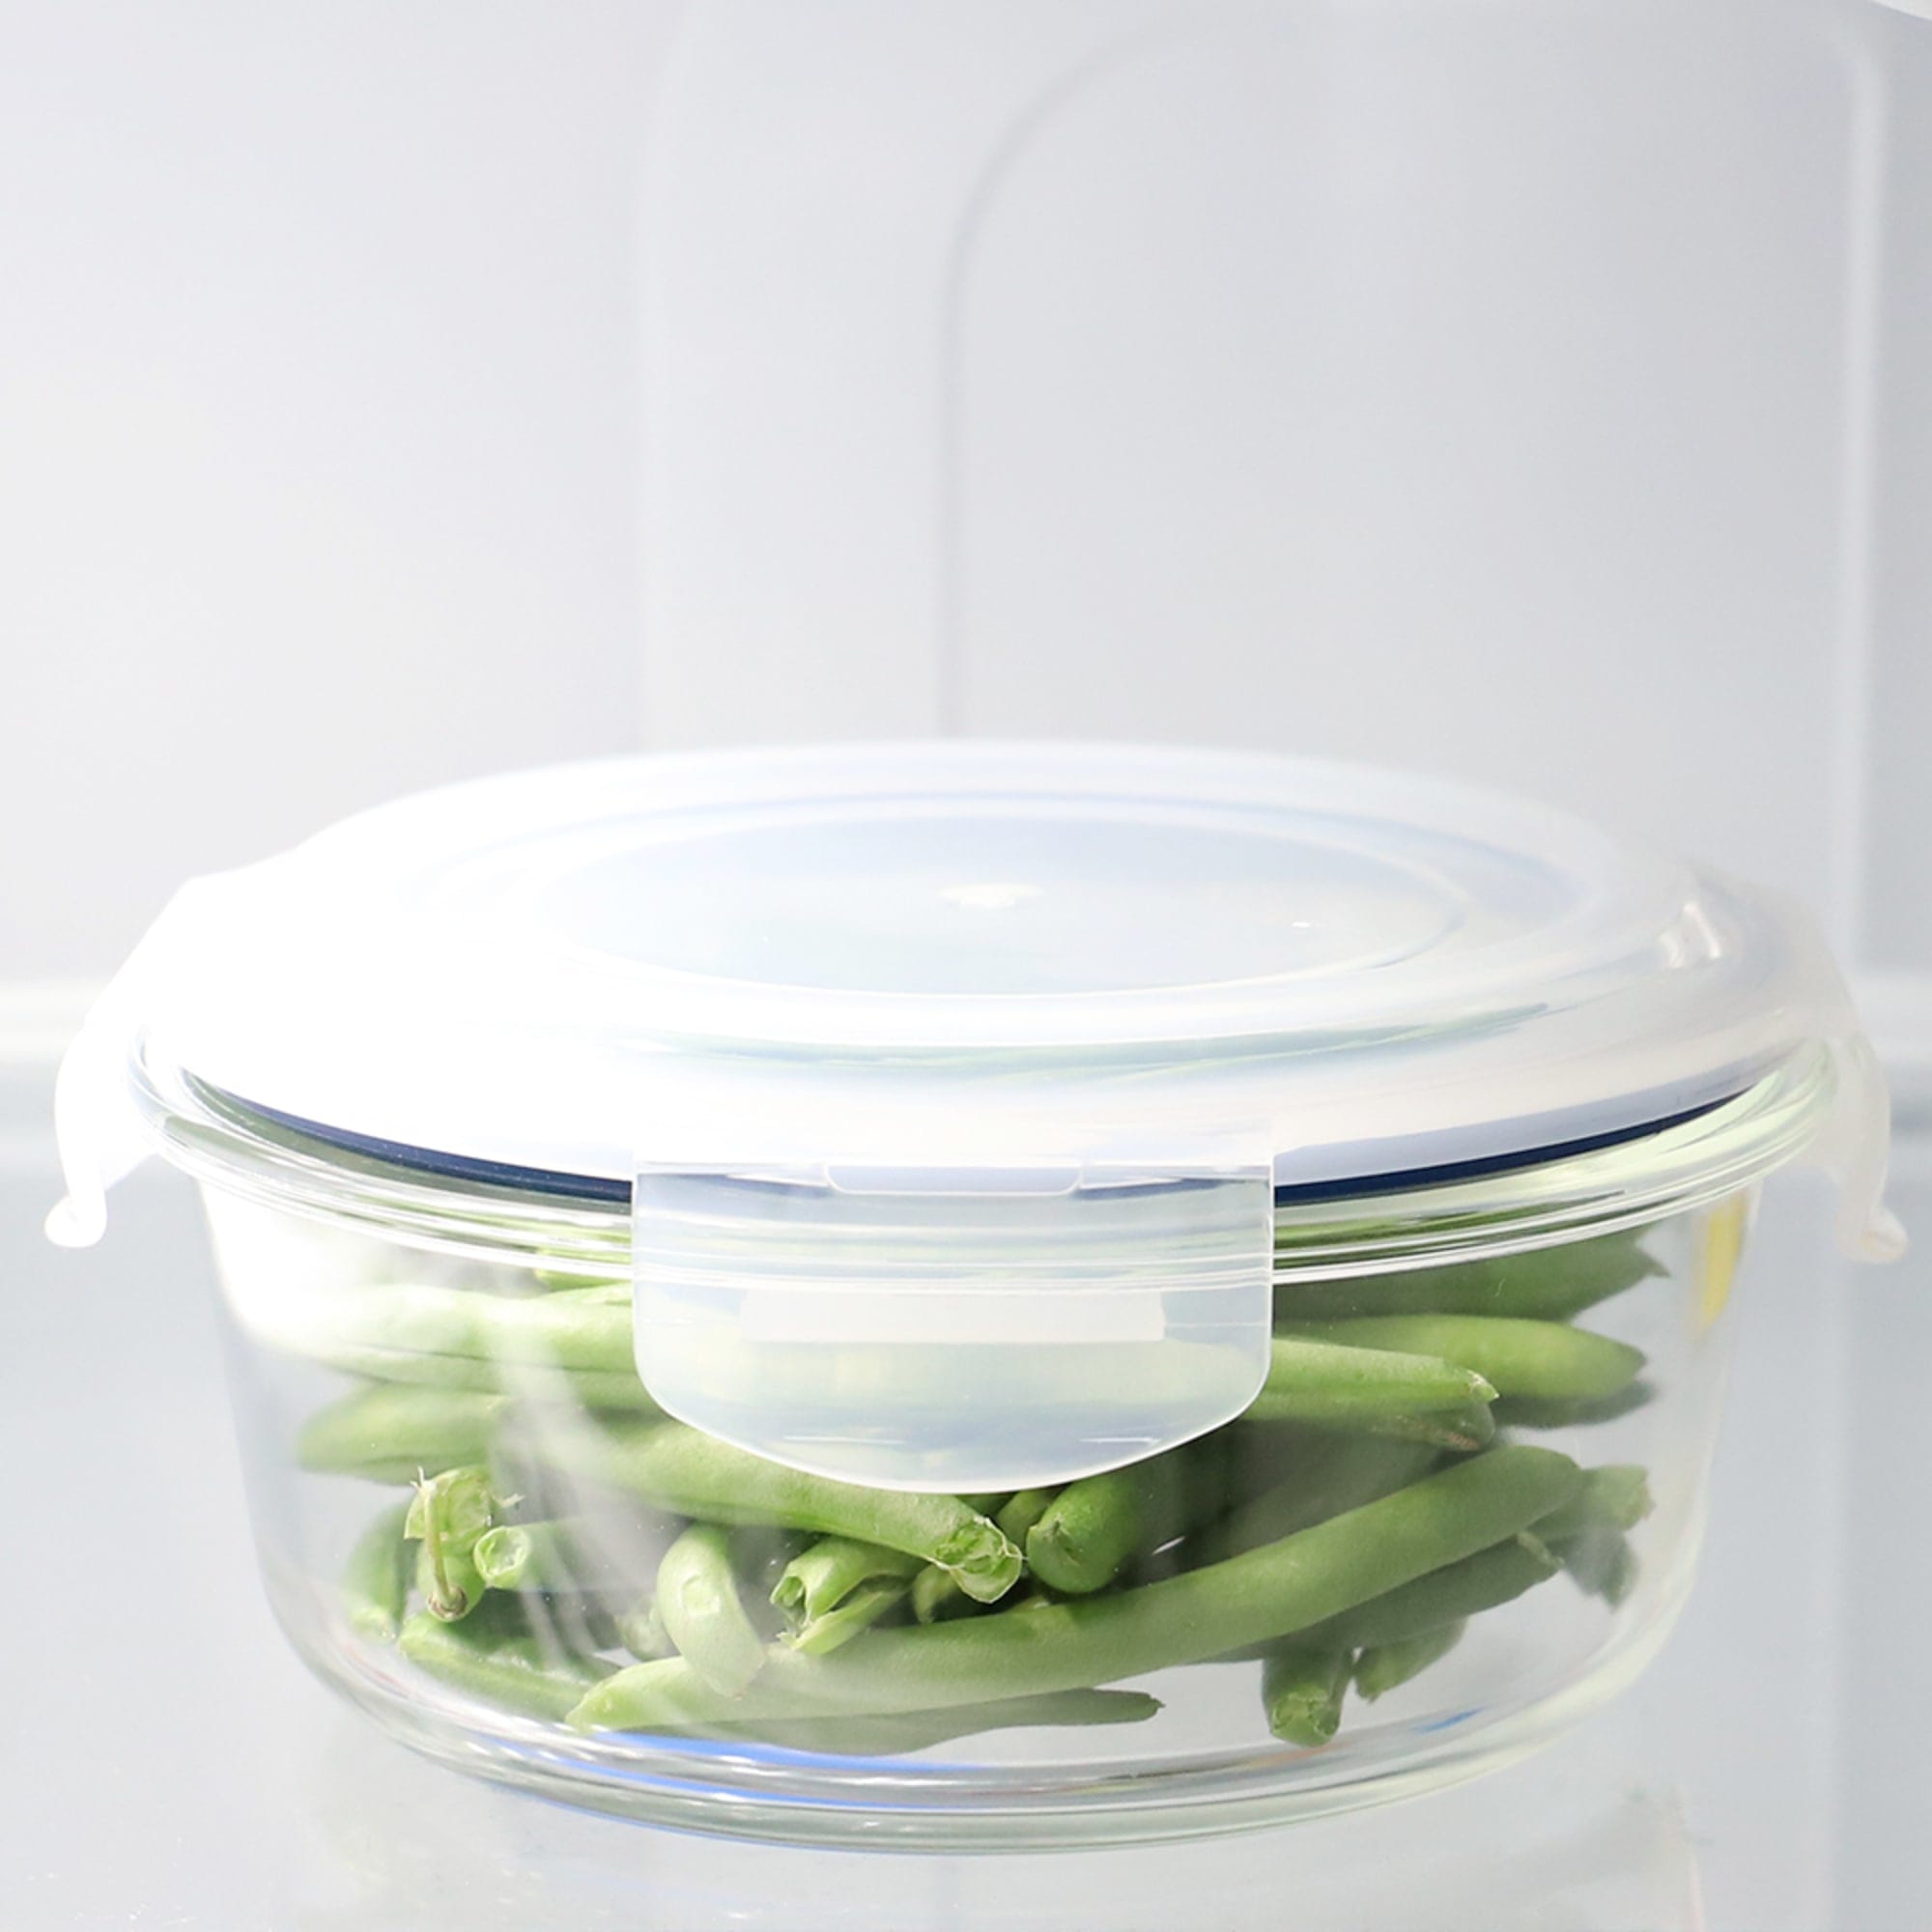 Borosilicate Glass Round Food Storage